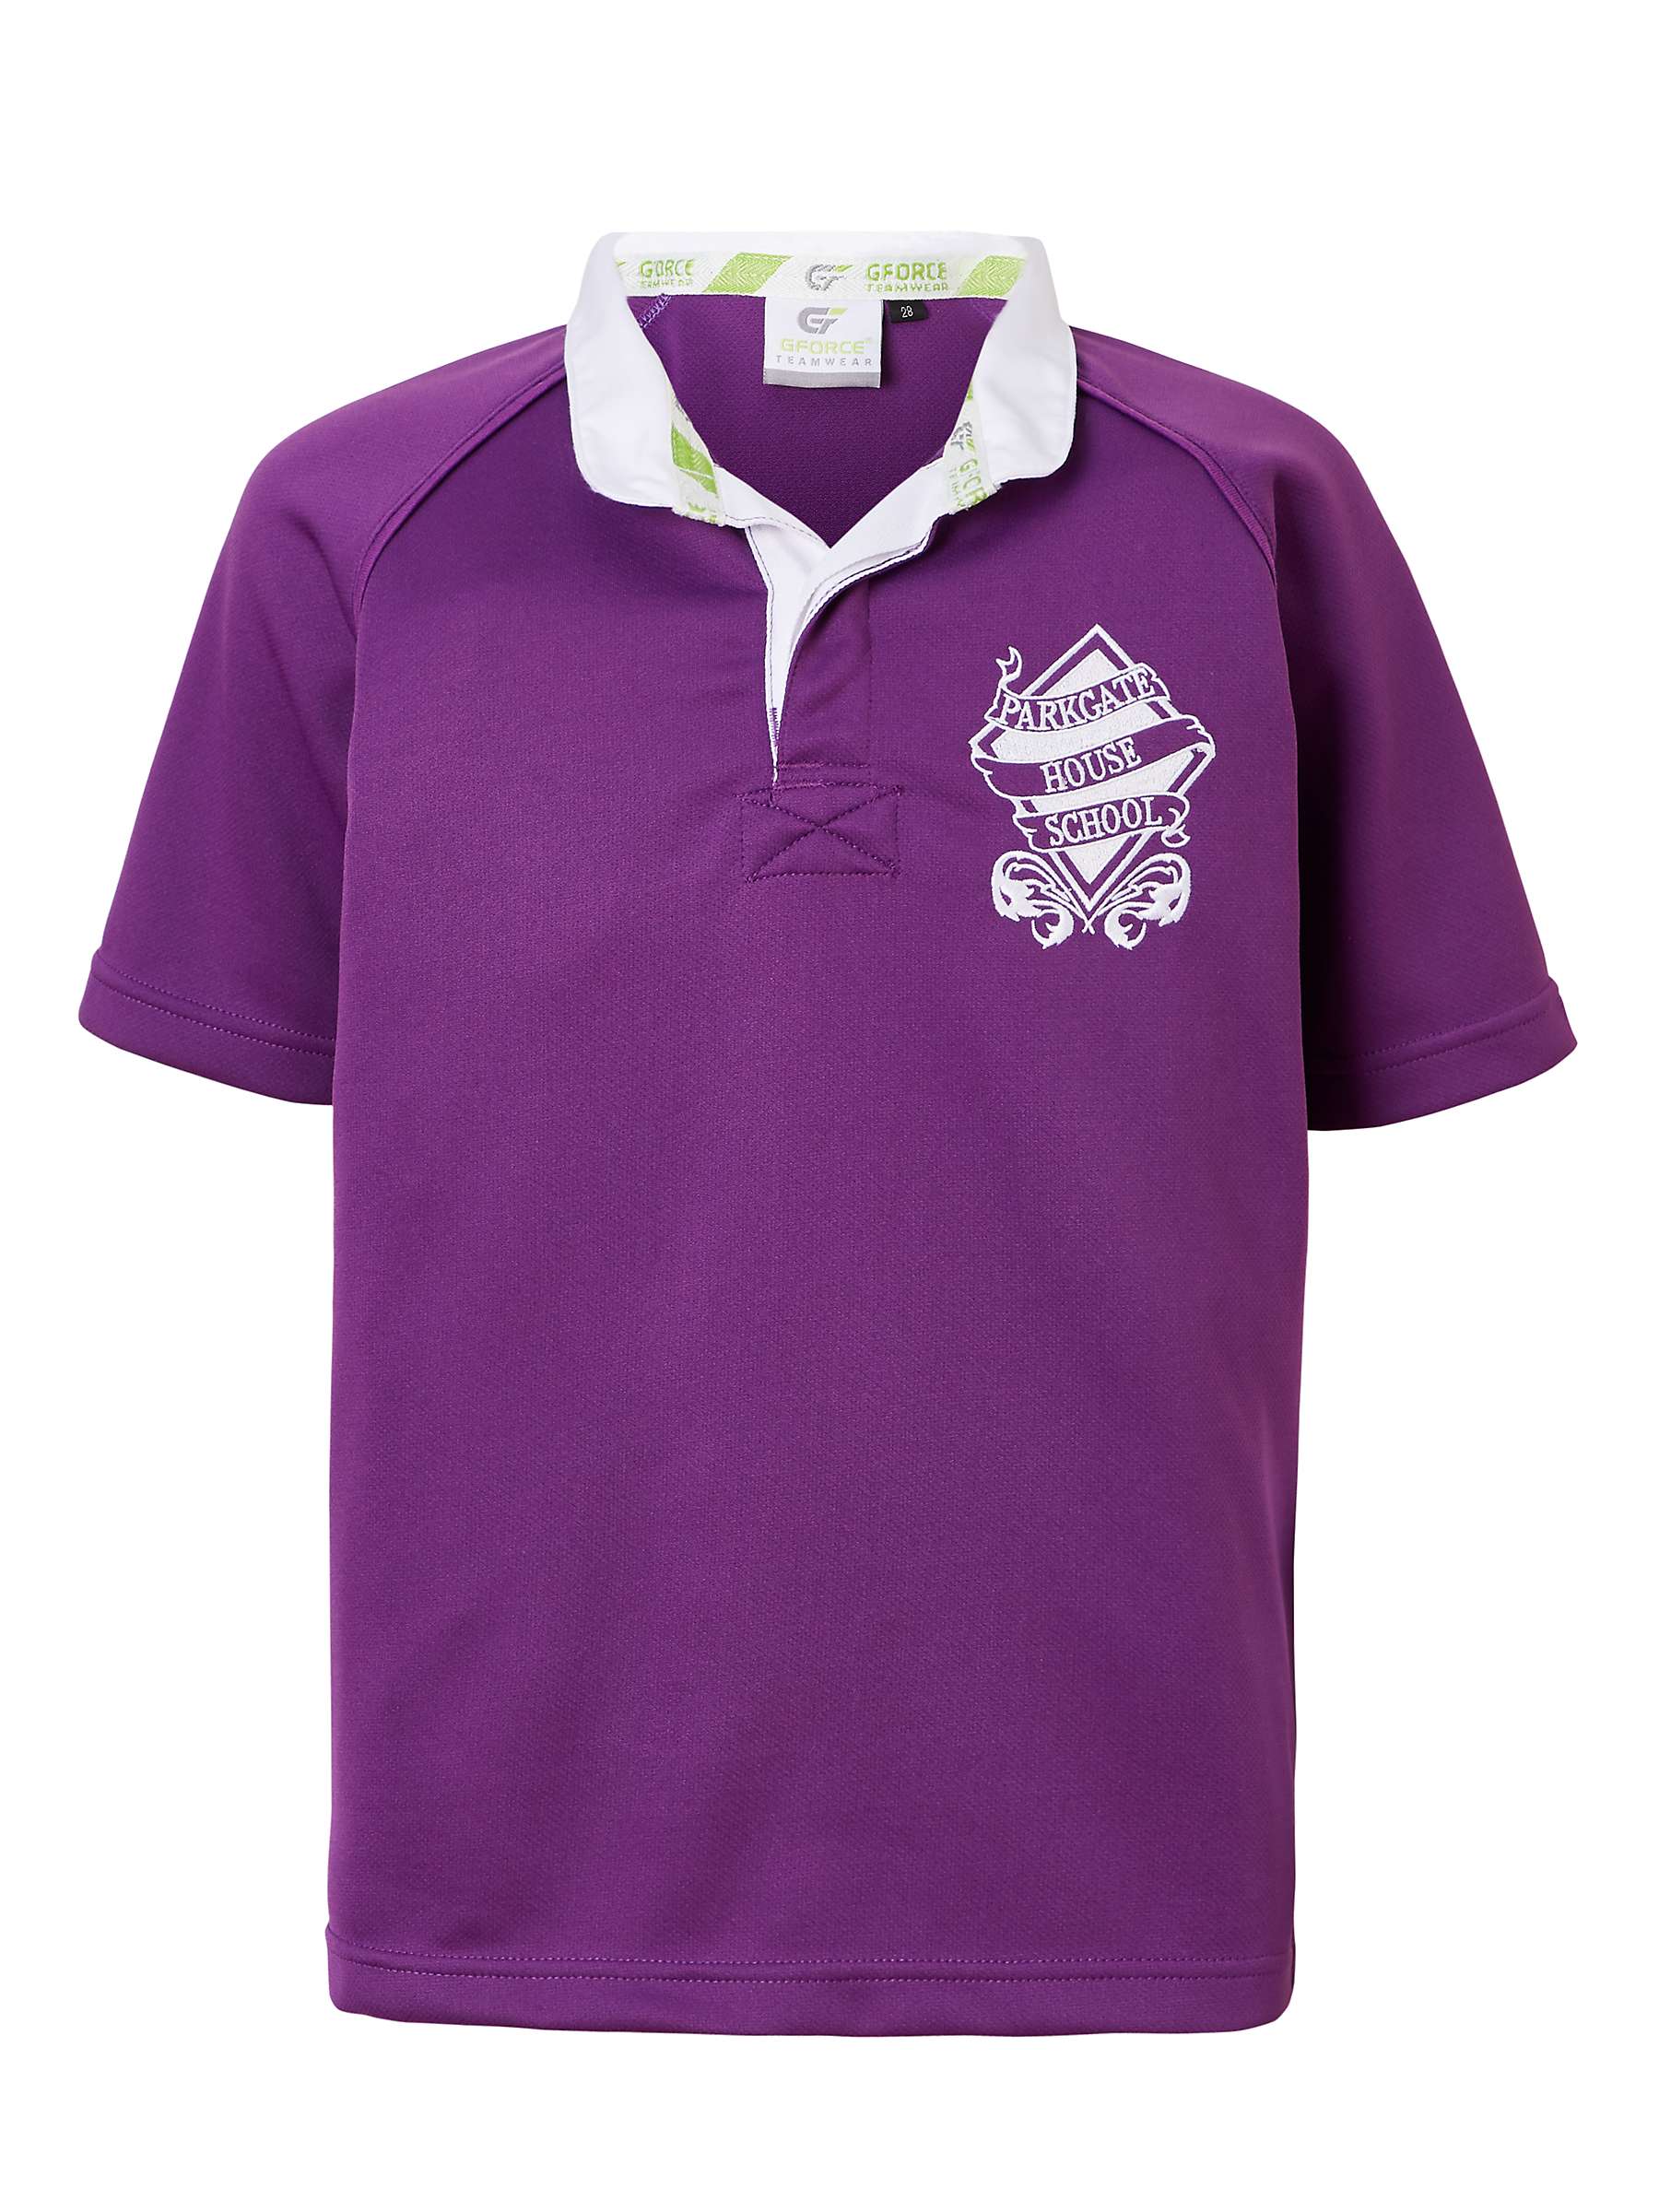 Buy Parkgate House School Sports Shirt, Purple Online at johnlewis.com